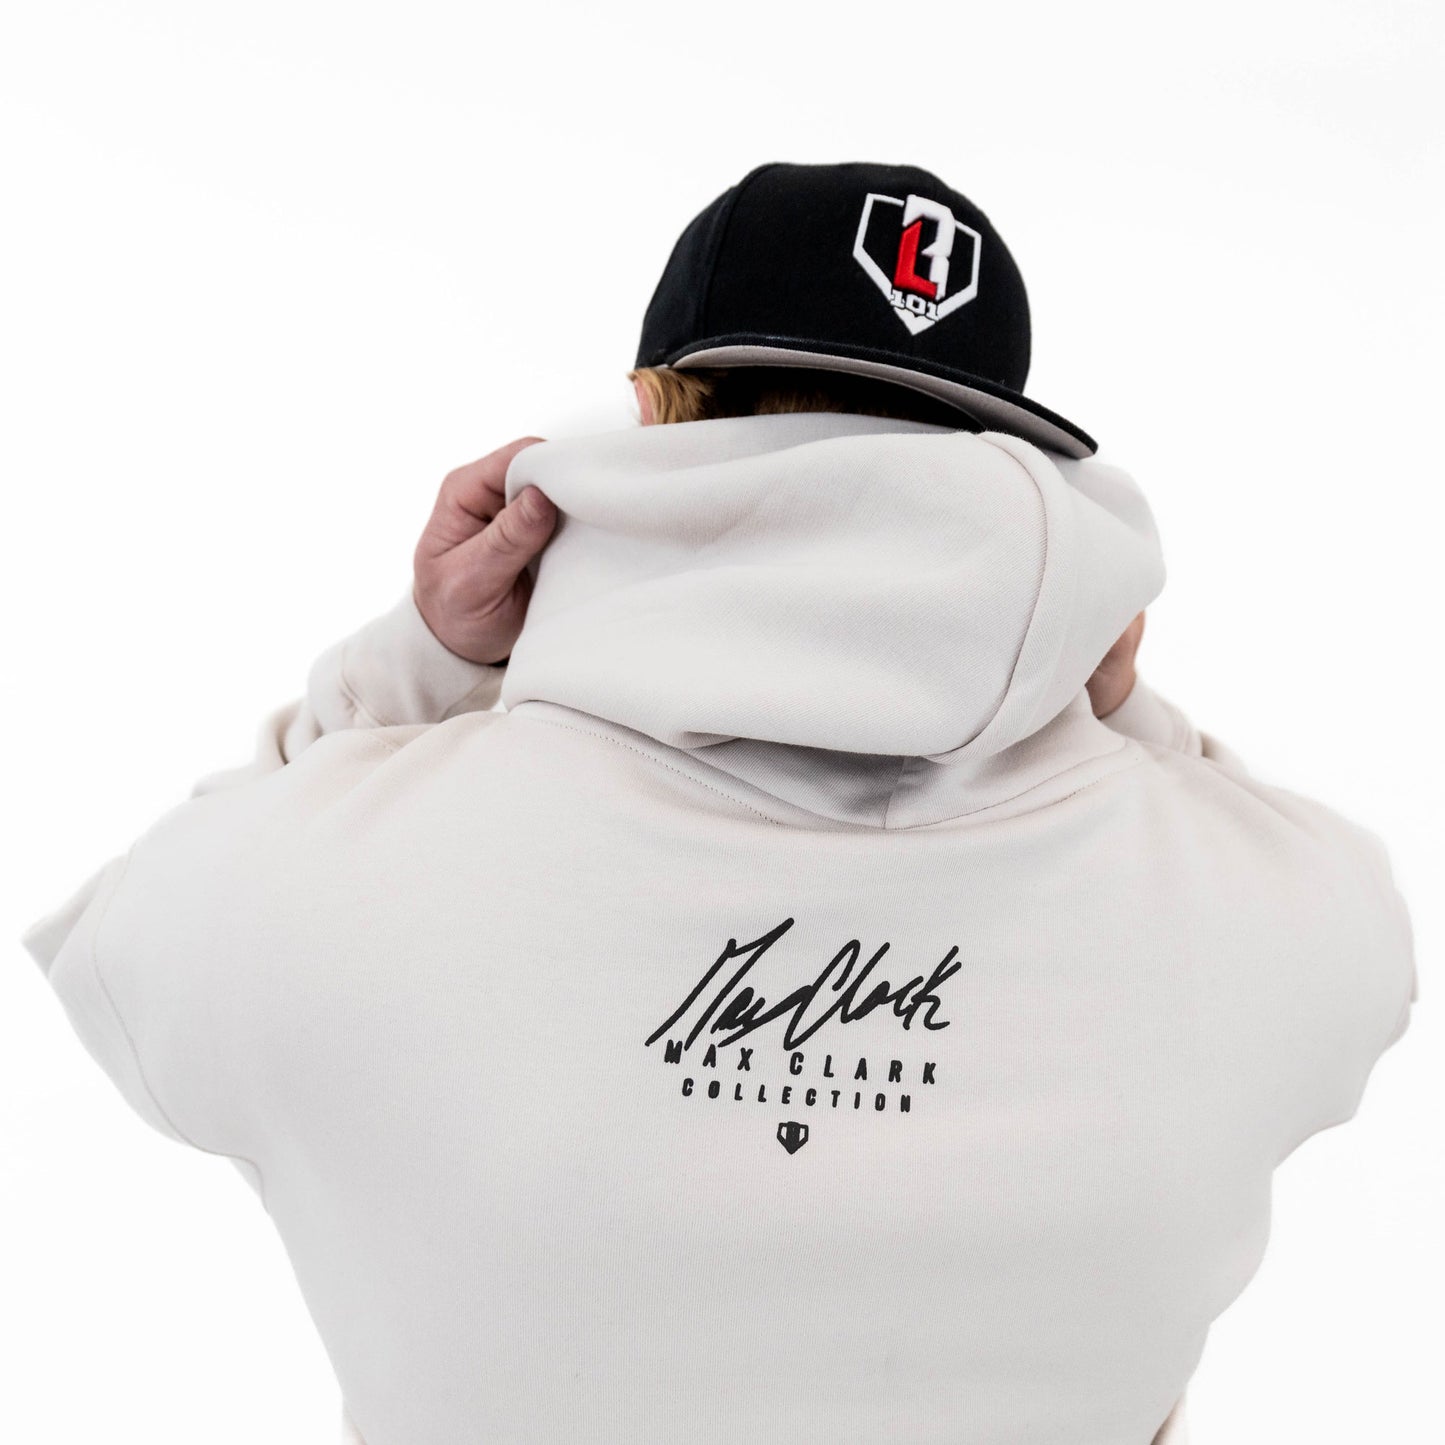 baseball hoodie, max clark collection